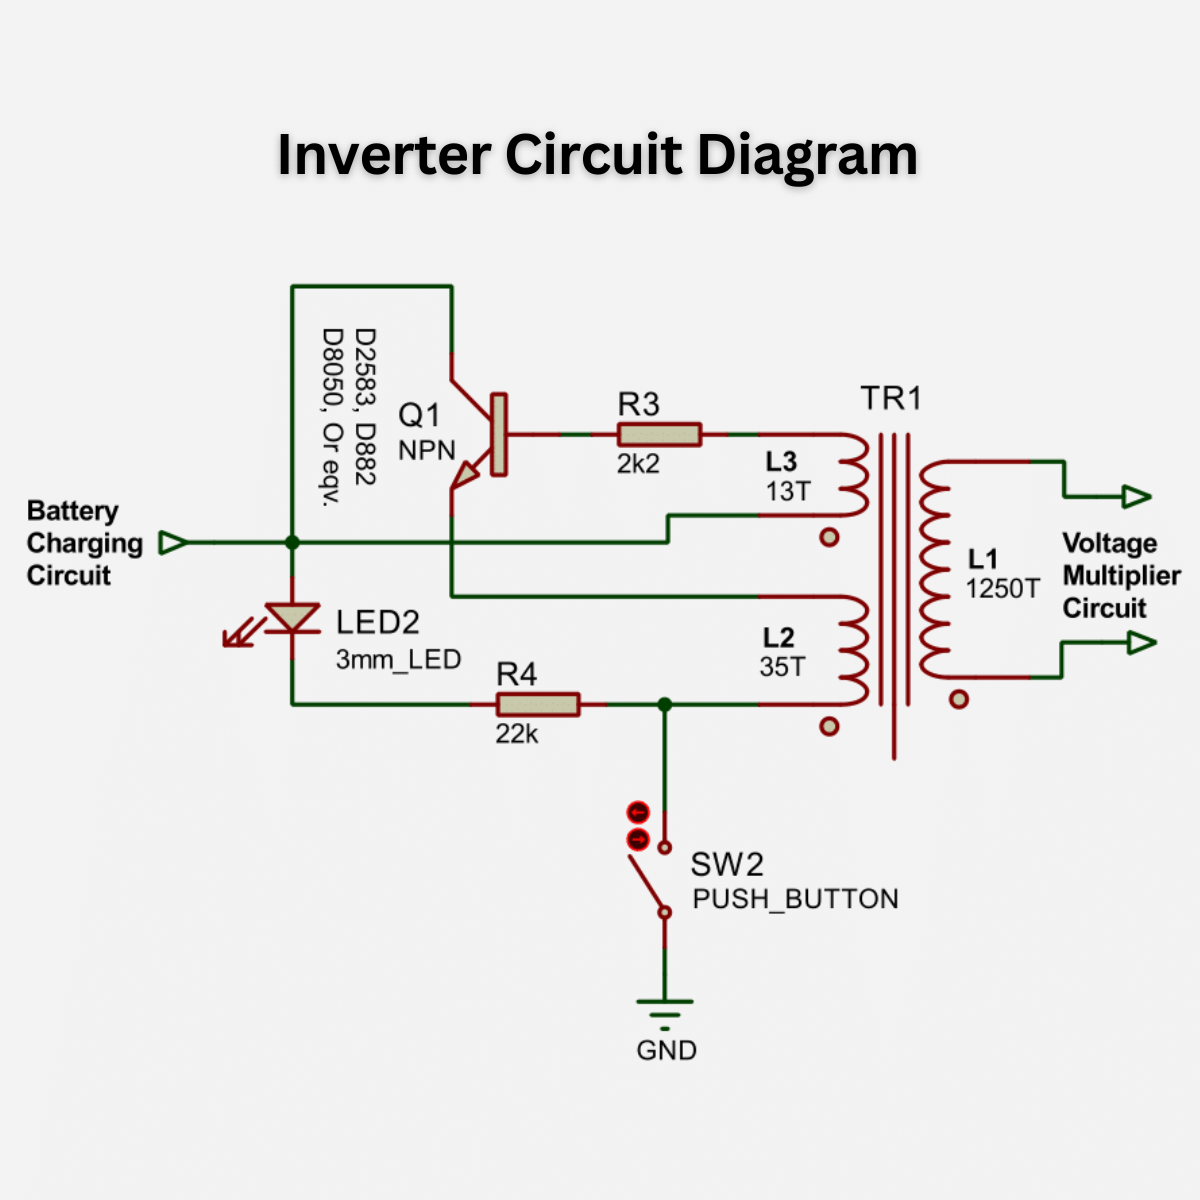 Inverter circuit of Mosquito killer bat circuit